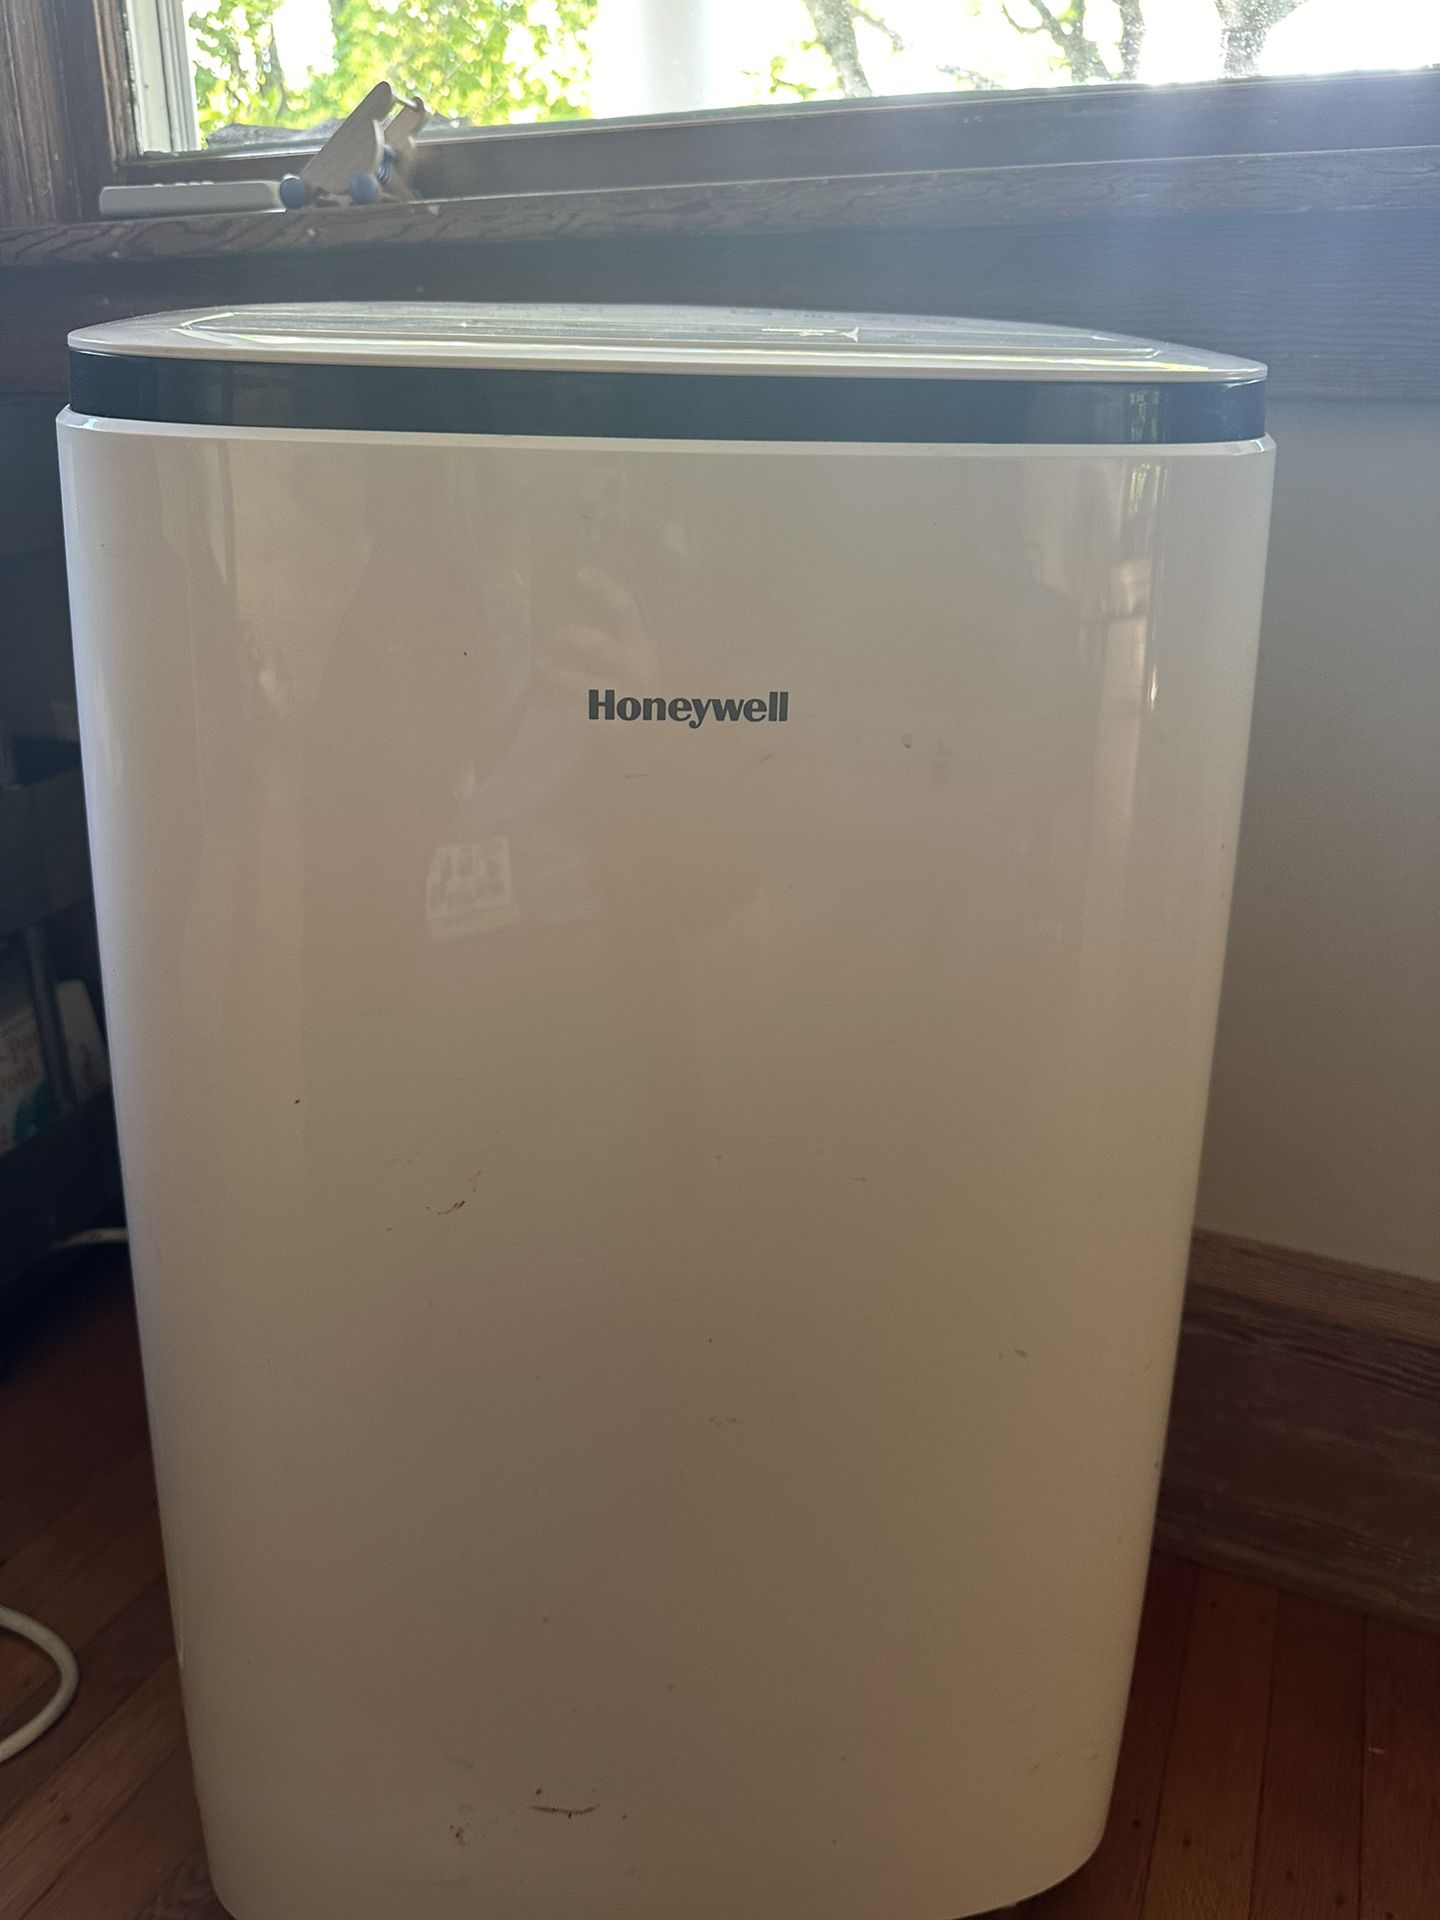 Honeywell AC Unit 12,000 BTU—with multi-speed fan, and dehumidifier